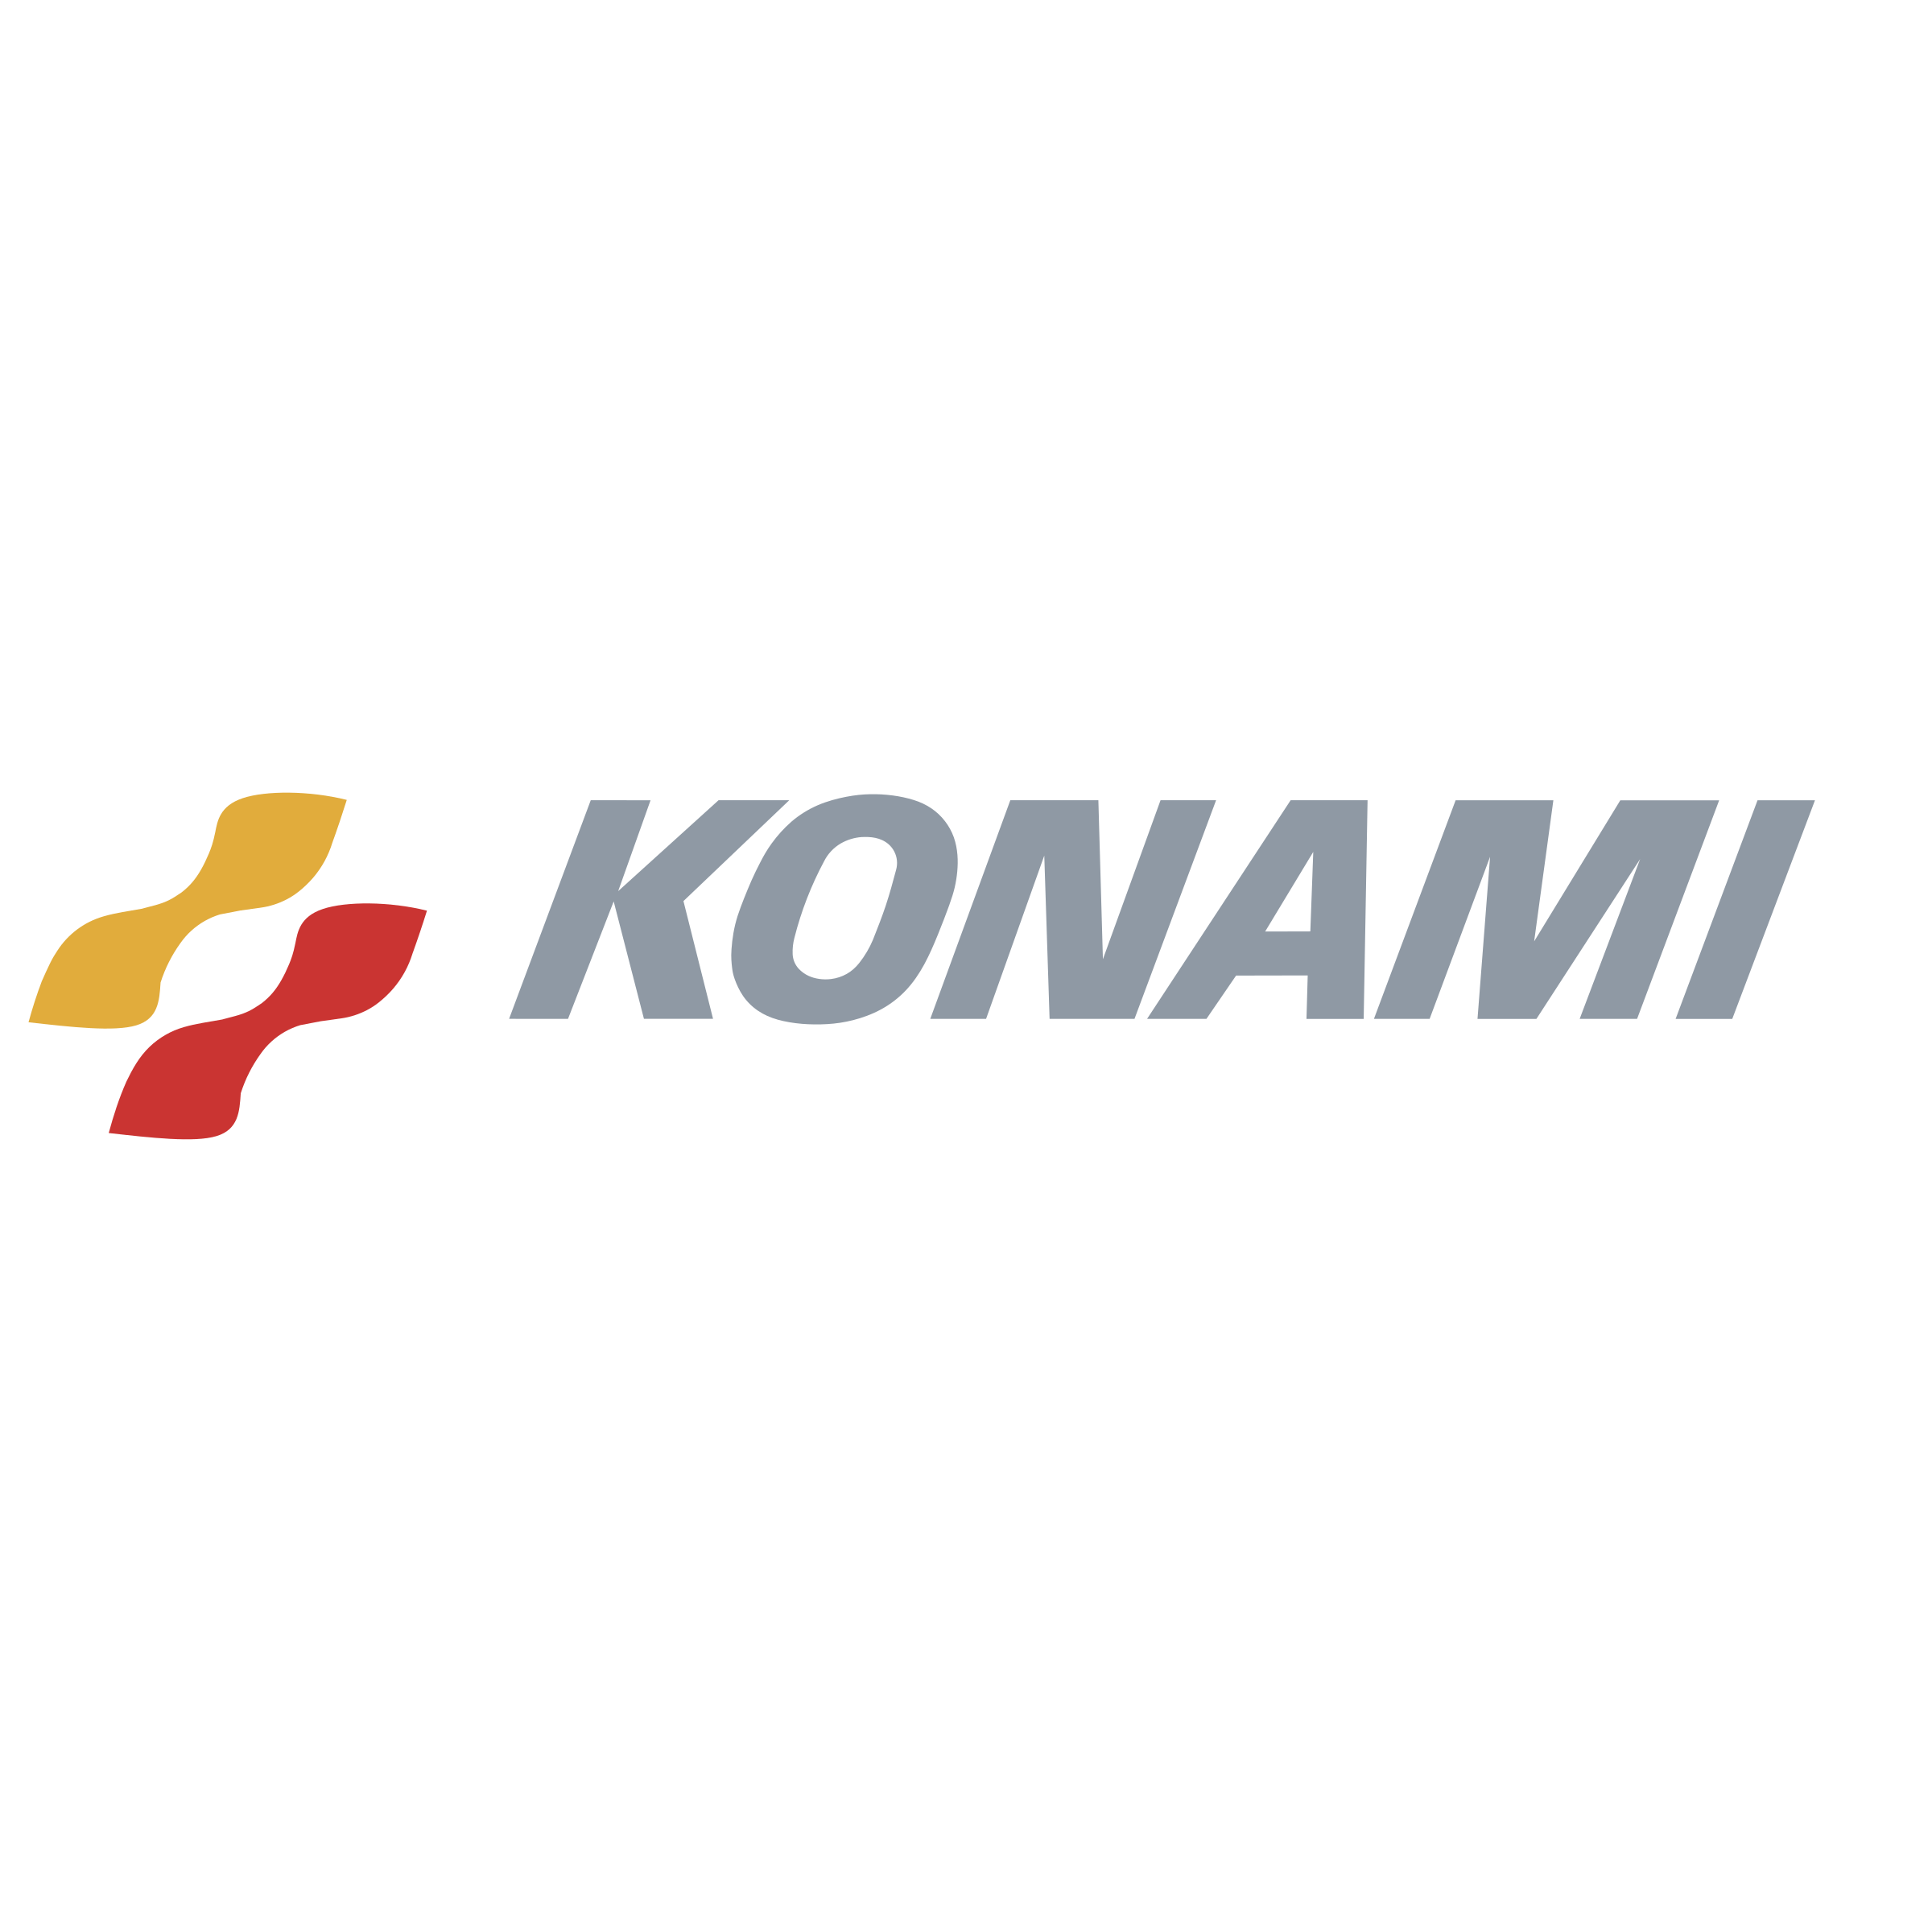 Konami Logo - Konami Logo PNG Transparent & SVG Vector - Freebie Supply